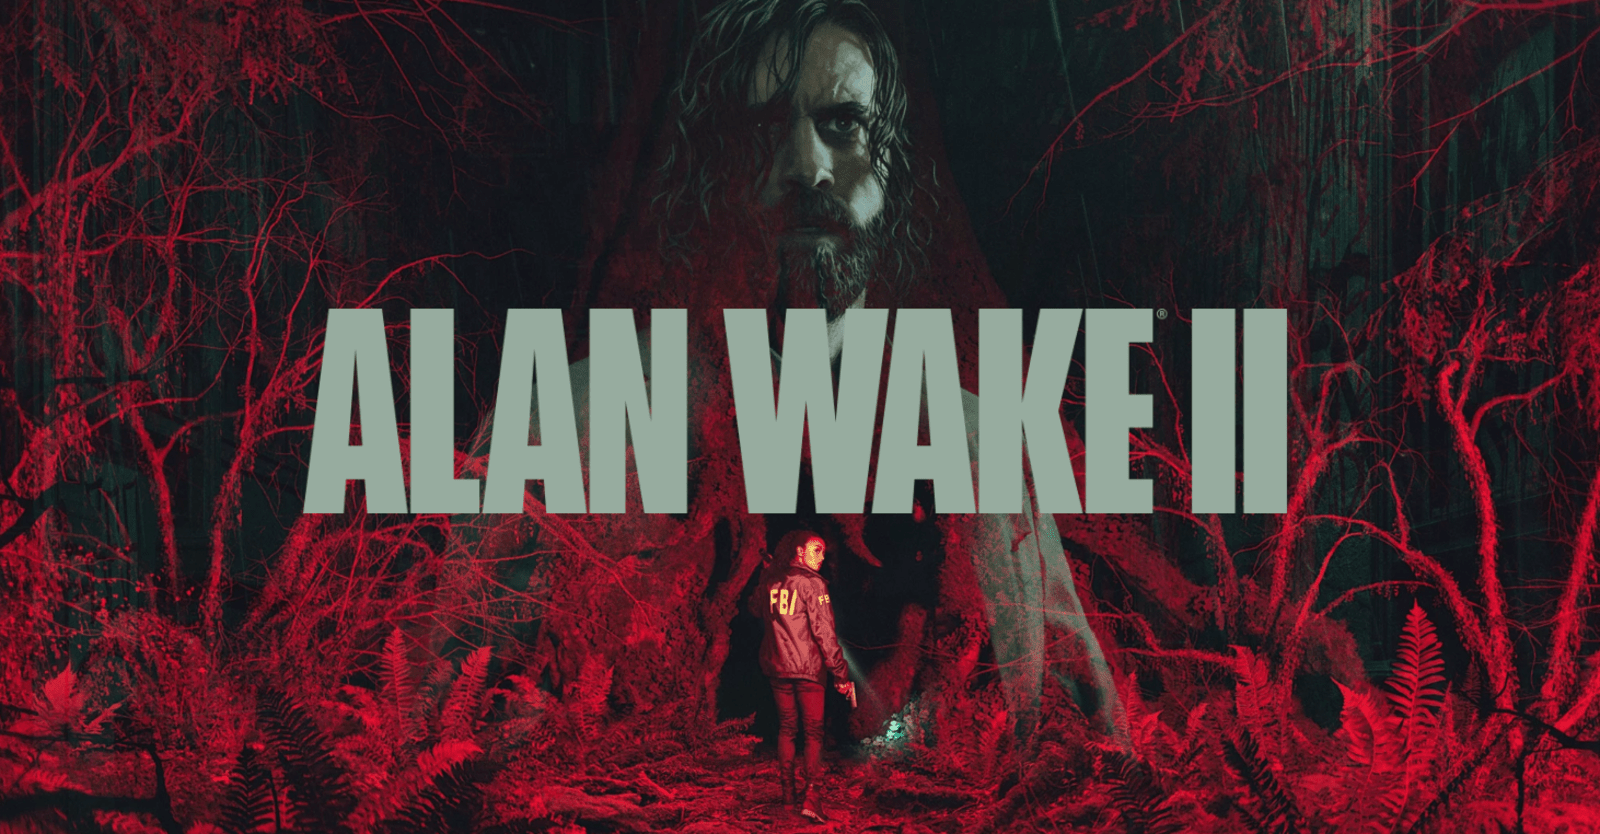 Soft Lock in Alan Wake 1 : r/AlanWake